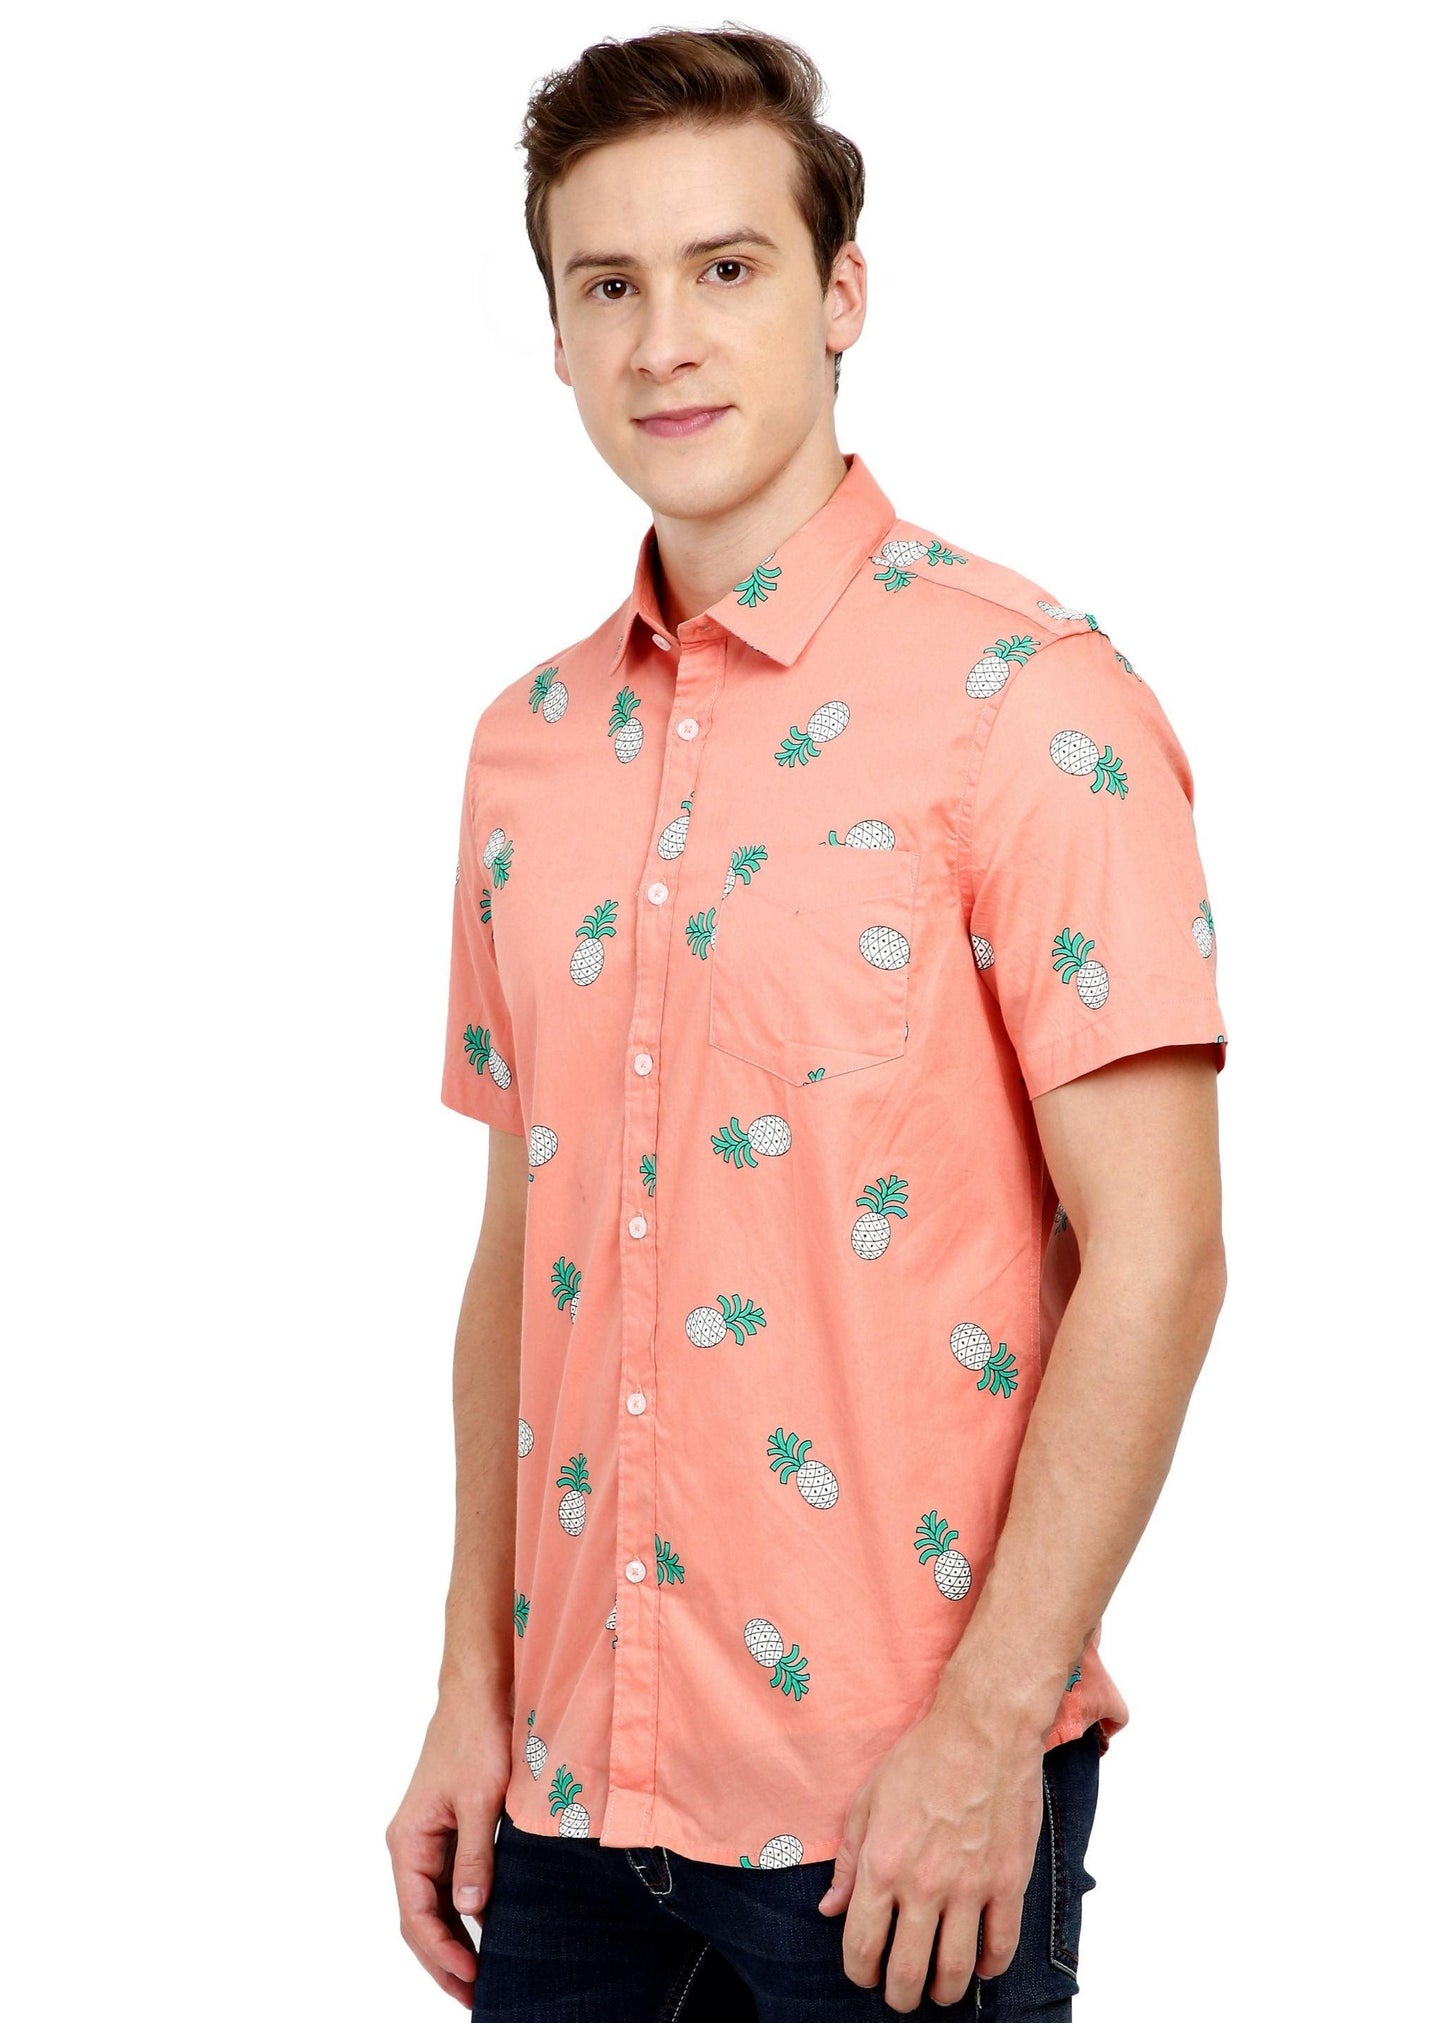 Tusok-pink-pineappleFeatured Shirt, Vacation-Printed Shirtimage-Peach Pineapple (2)